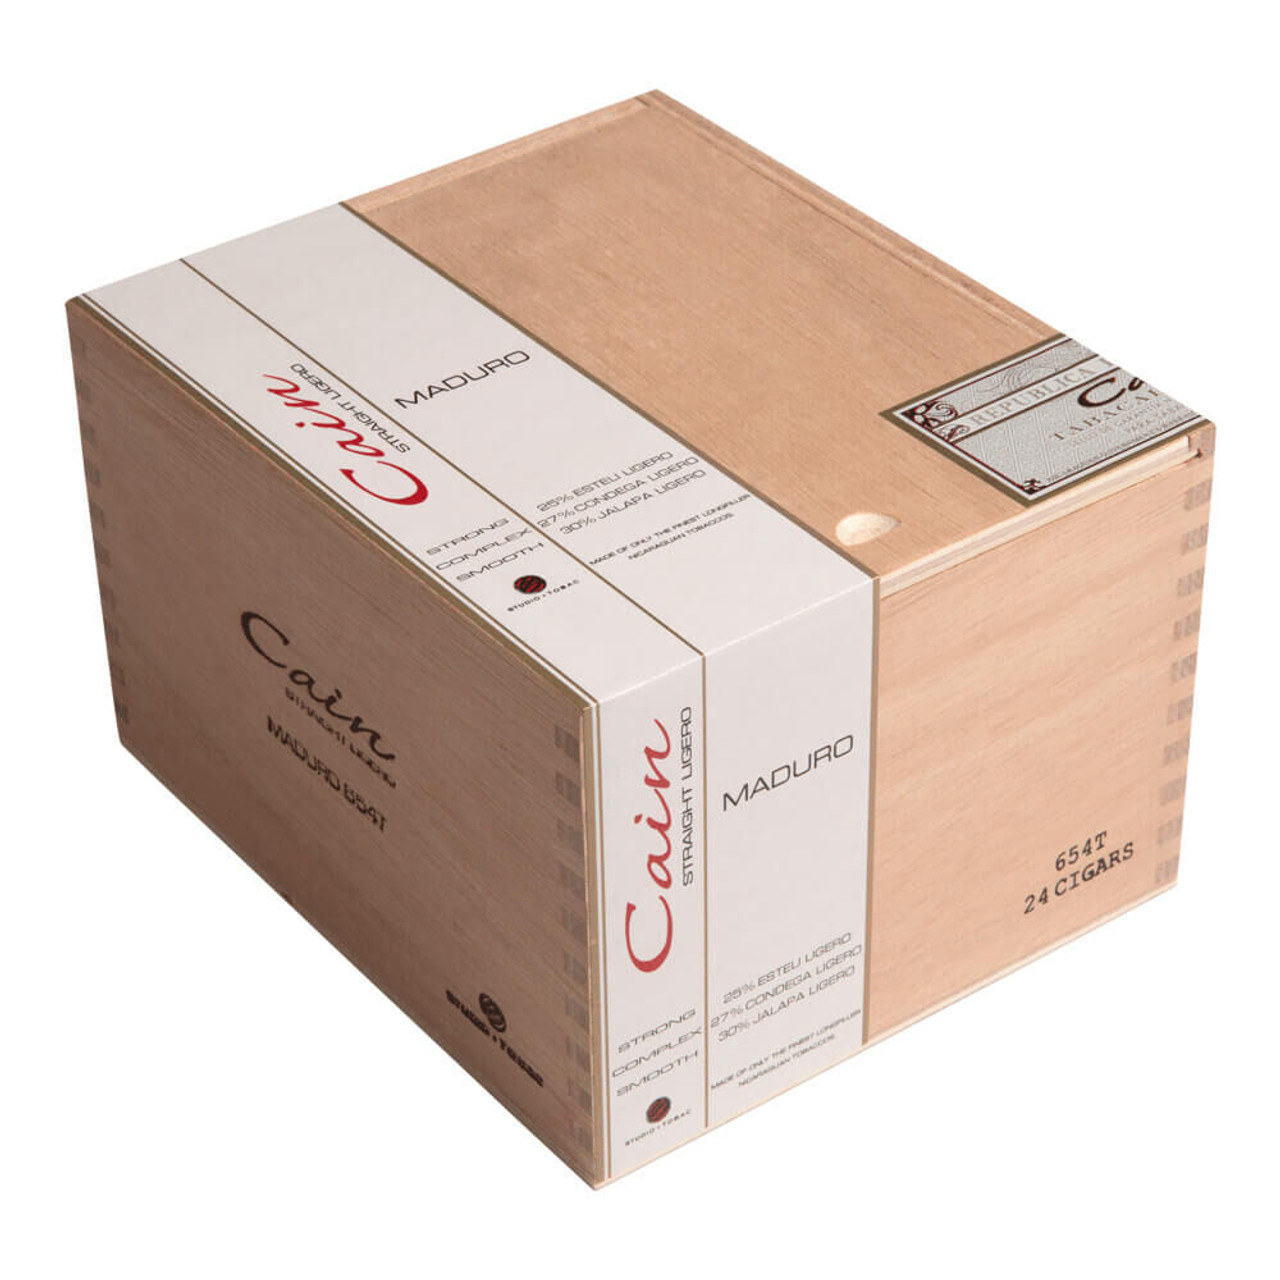 Oliva Cain 654 Maduro Torpedo Cigars - 6 x 54 (Box of 24) *Box